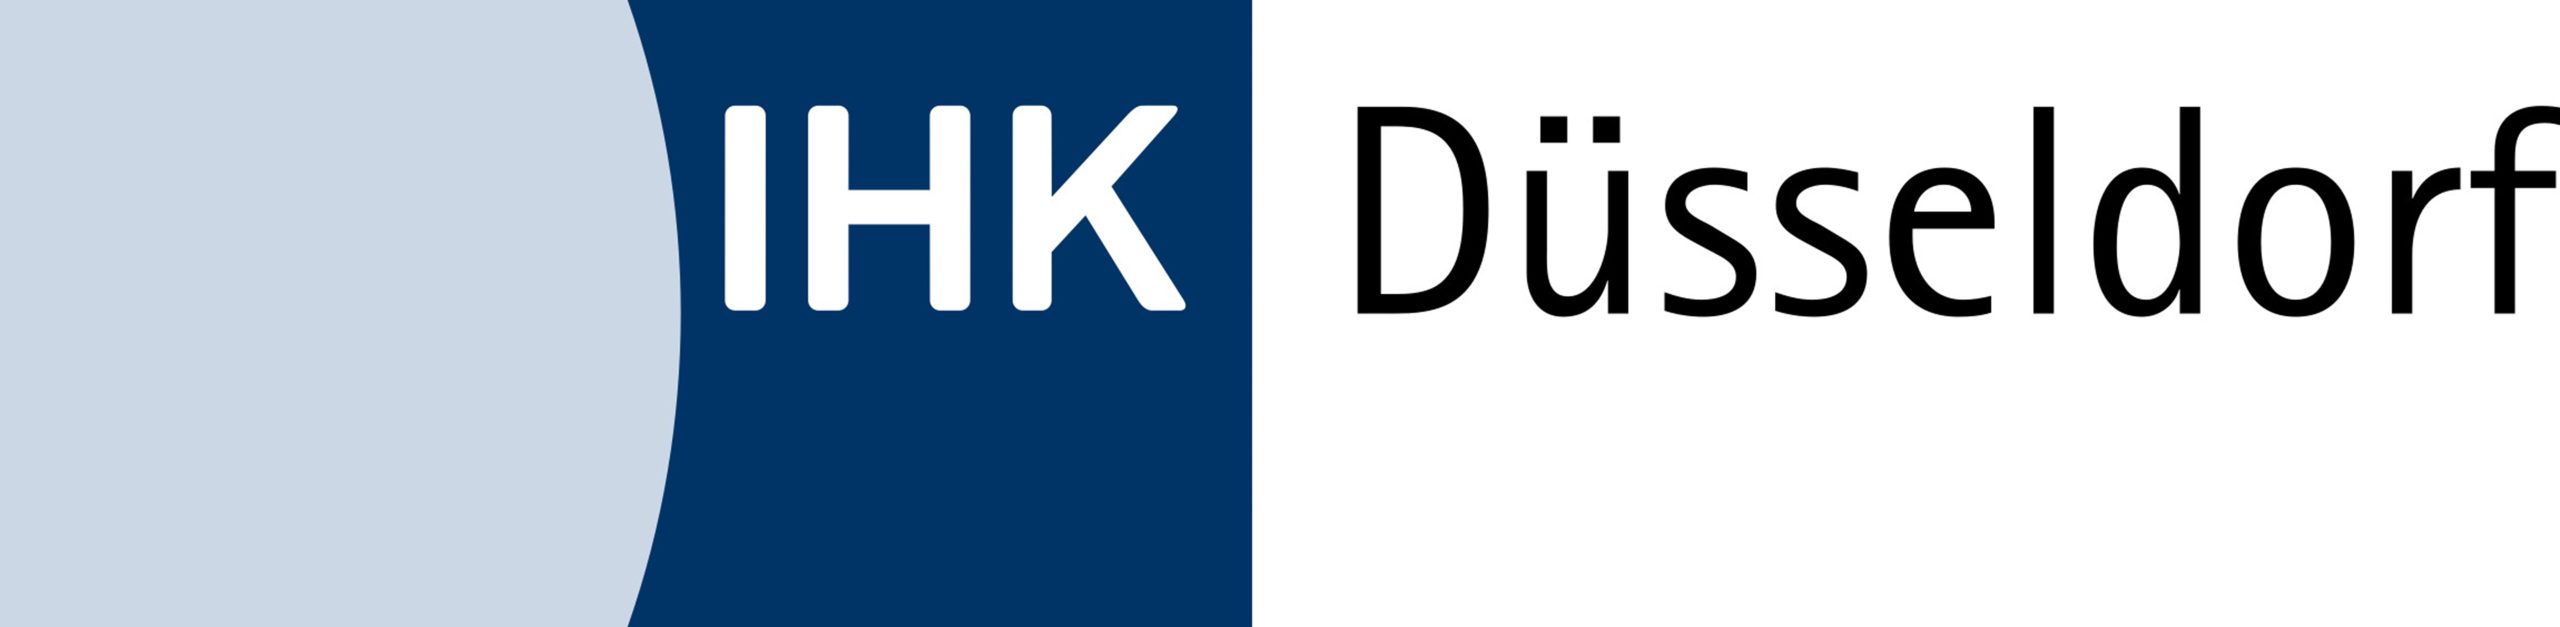 Logo-IHK-Duesseldorf